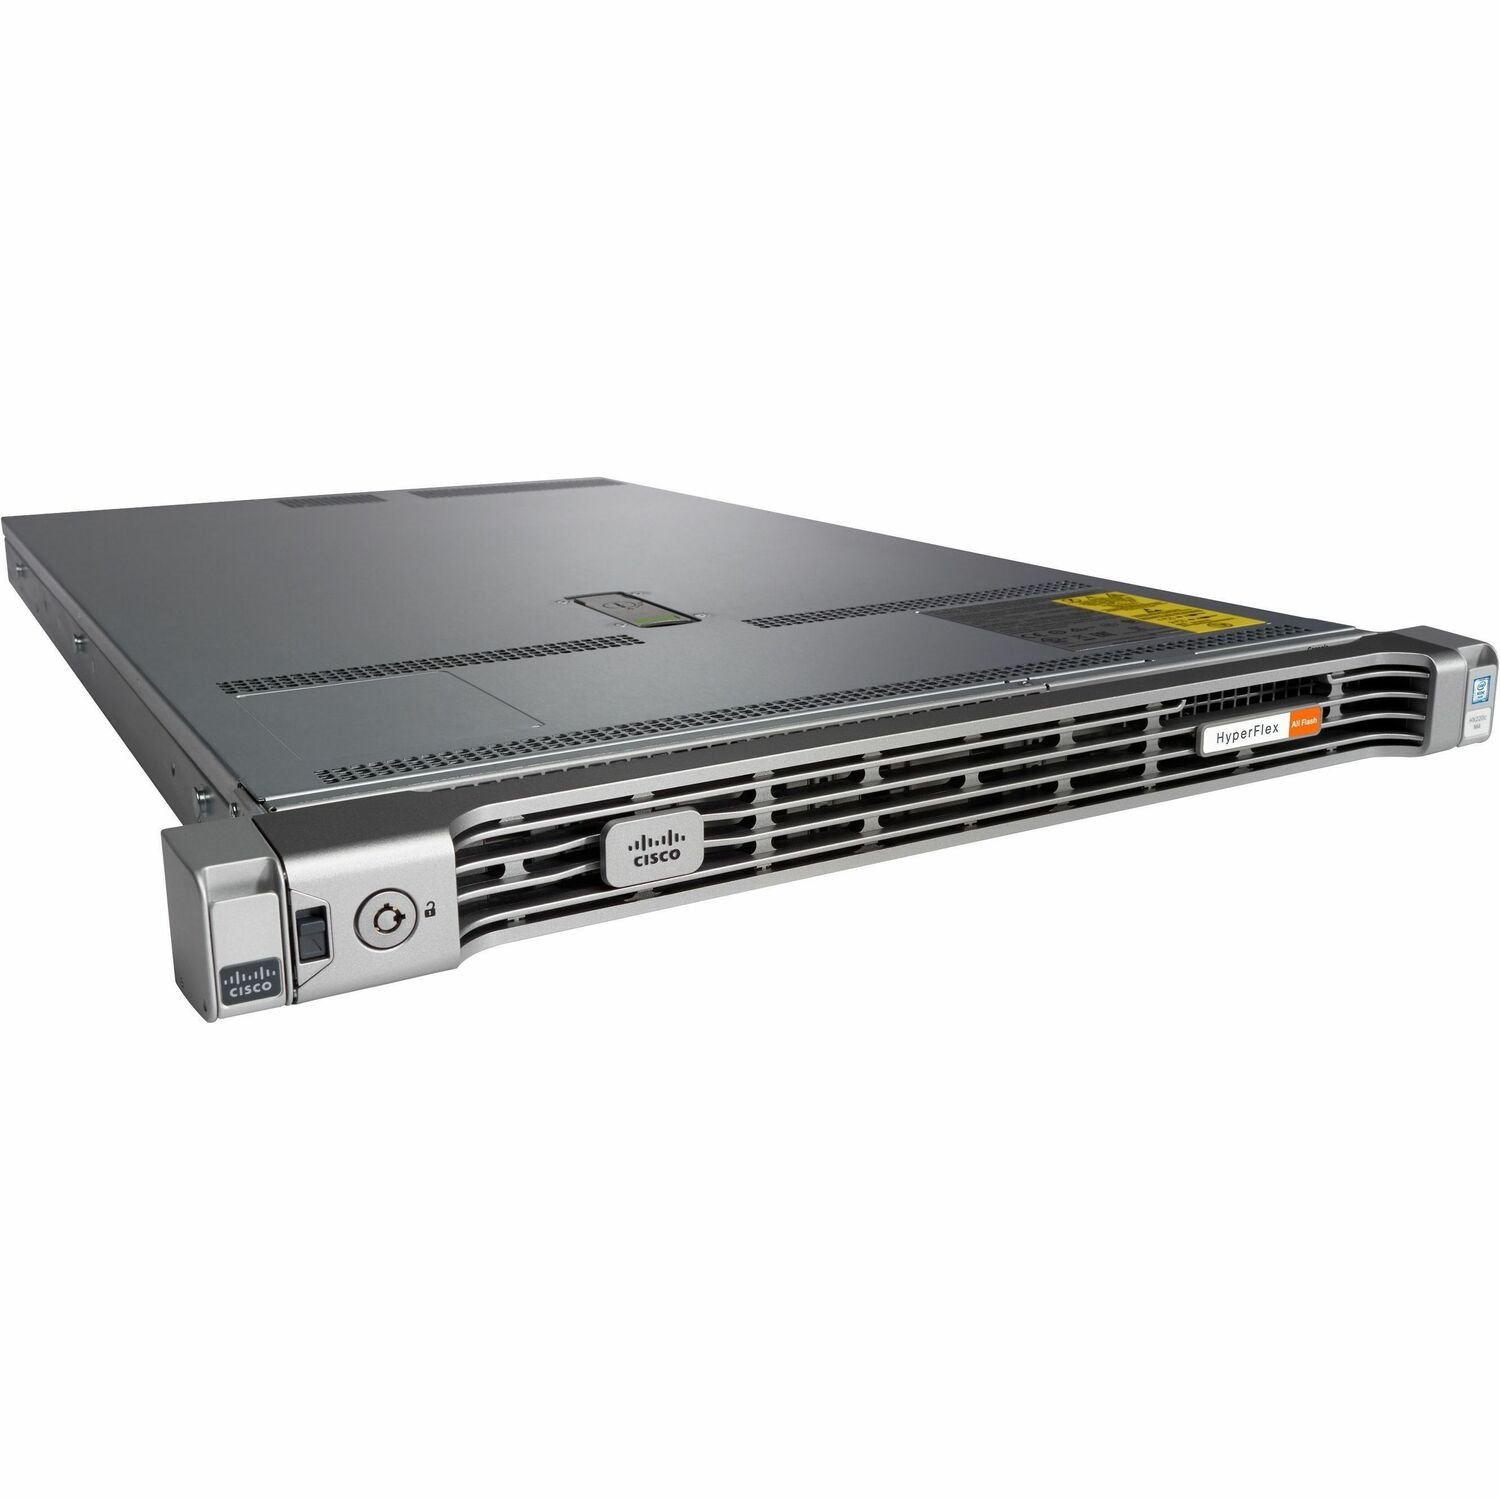 Cisco HyperFlex HX220c M4 1U Rack Server - 2 x Intel Xeon E5-2650 v4 2.20 GHz - 384 GB RAM - 12Gb/s SAS Controller